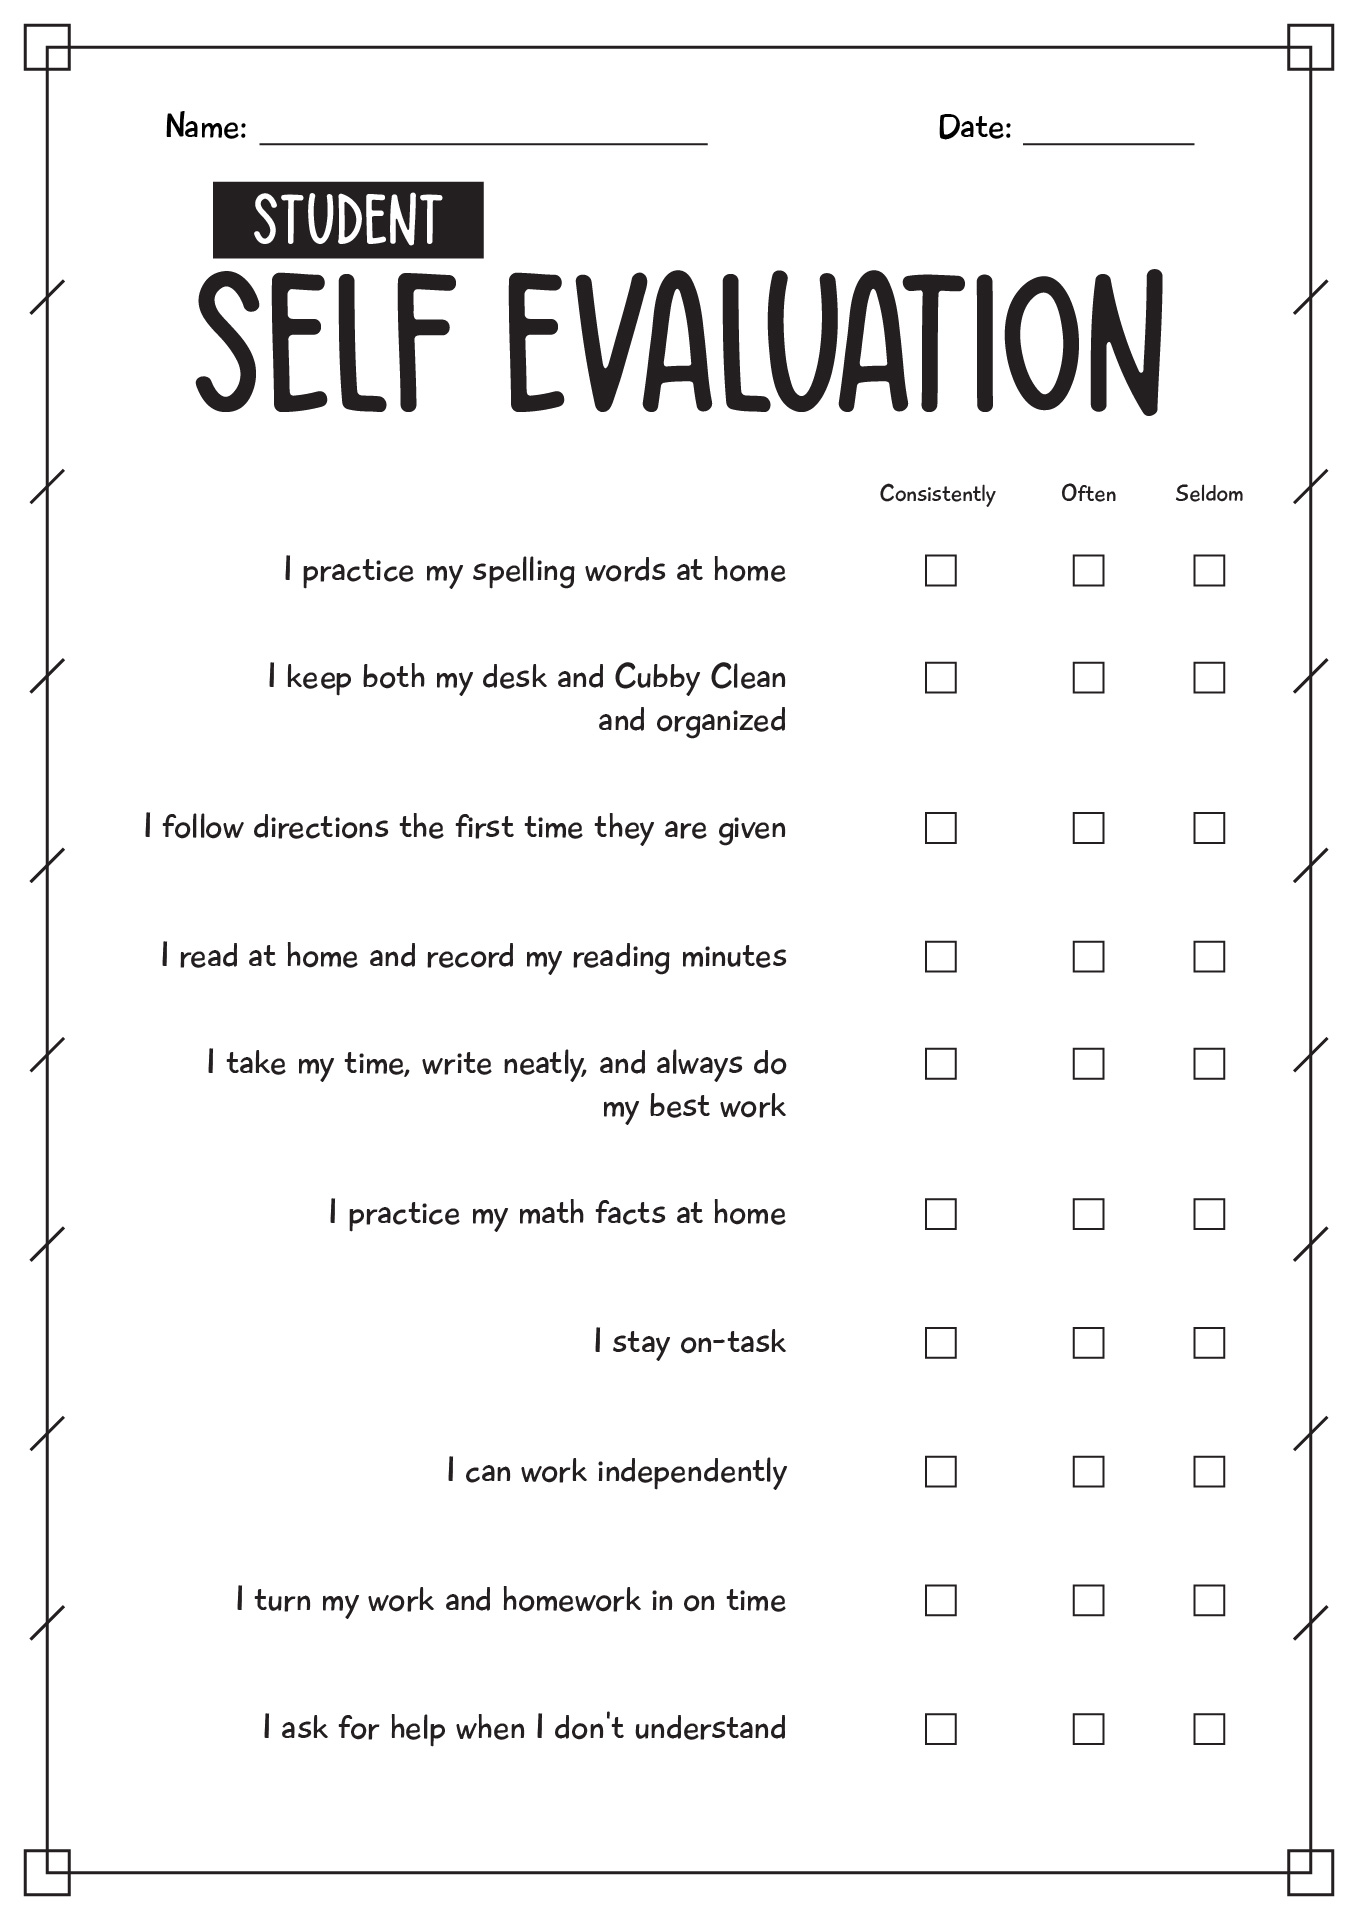 Student Self Evaluation Form